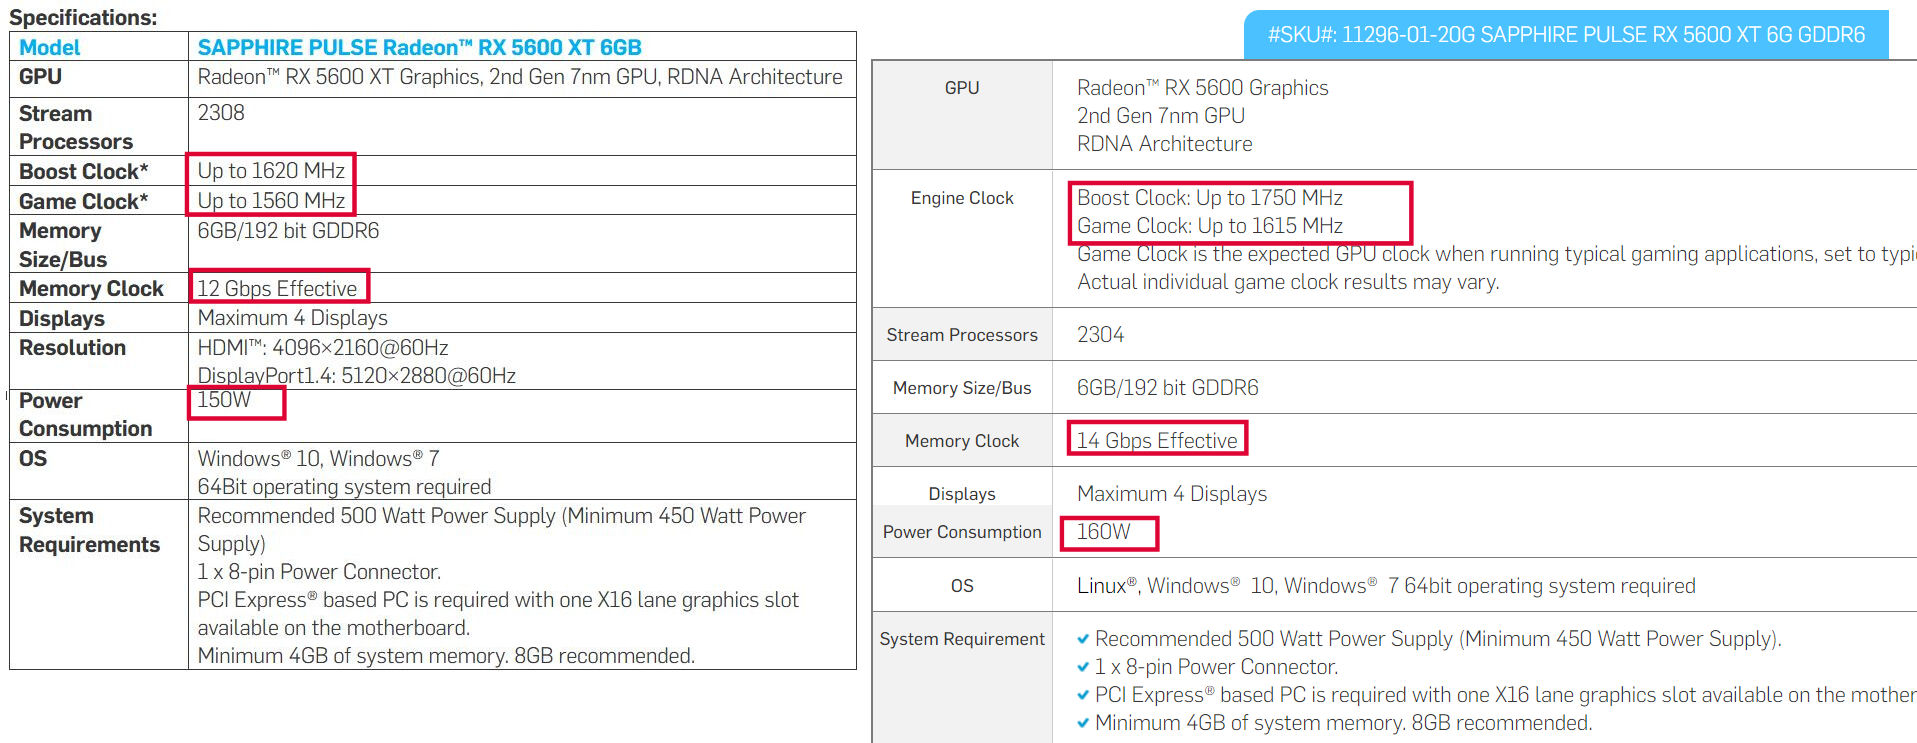 Risorsa grafica - foto, screenshot o immagine in genere - relativa ai contenuti pubblicati da amdzone.it | Nome immagine: news30368_AMD-Radeon-RX-5600-XT-Boost-vs-NVIDIA-GeForce-RTX-2060_3.jpg